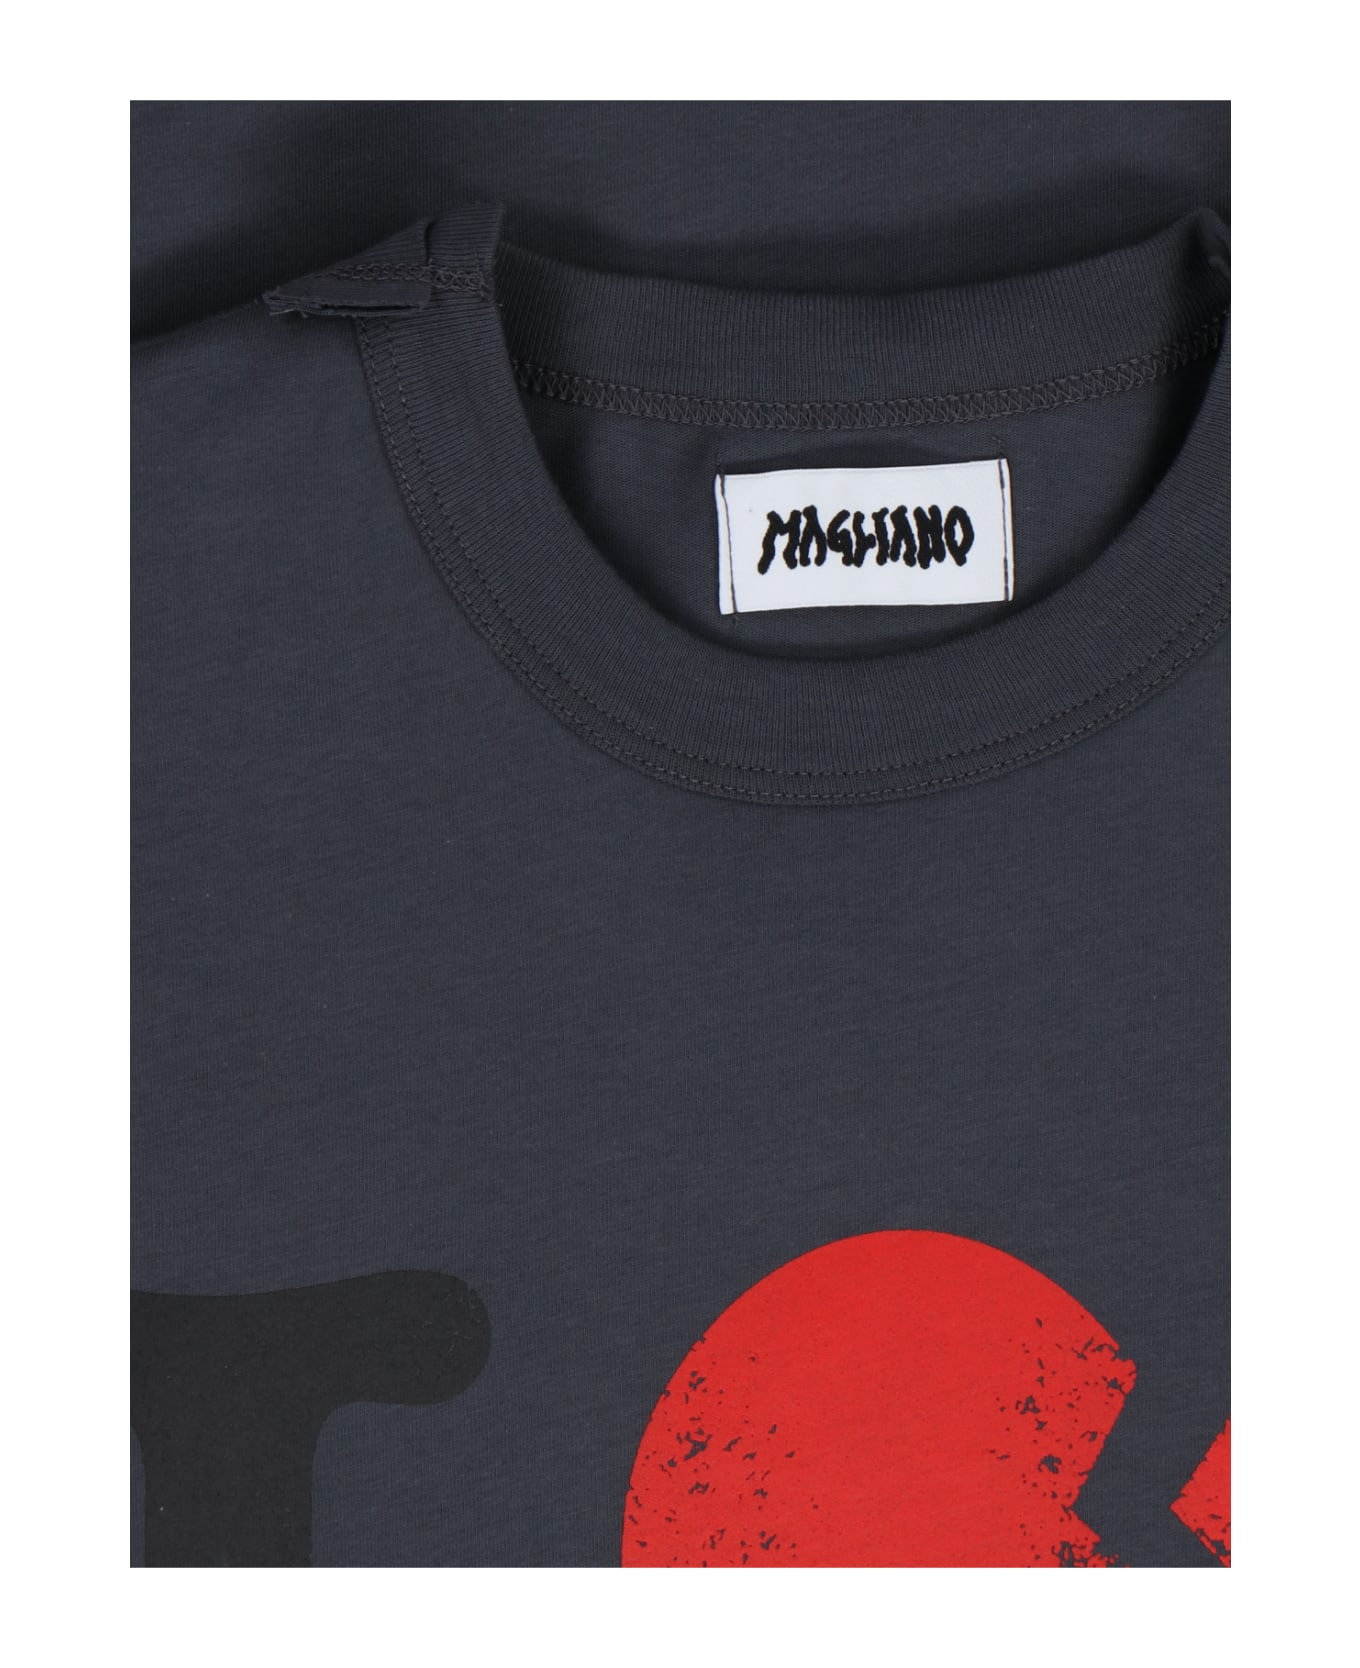 Magliano Printed T-shirt - Gray